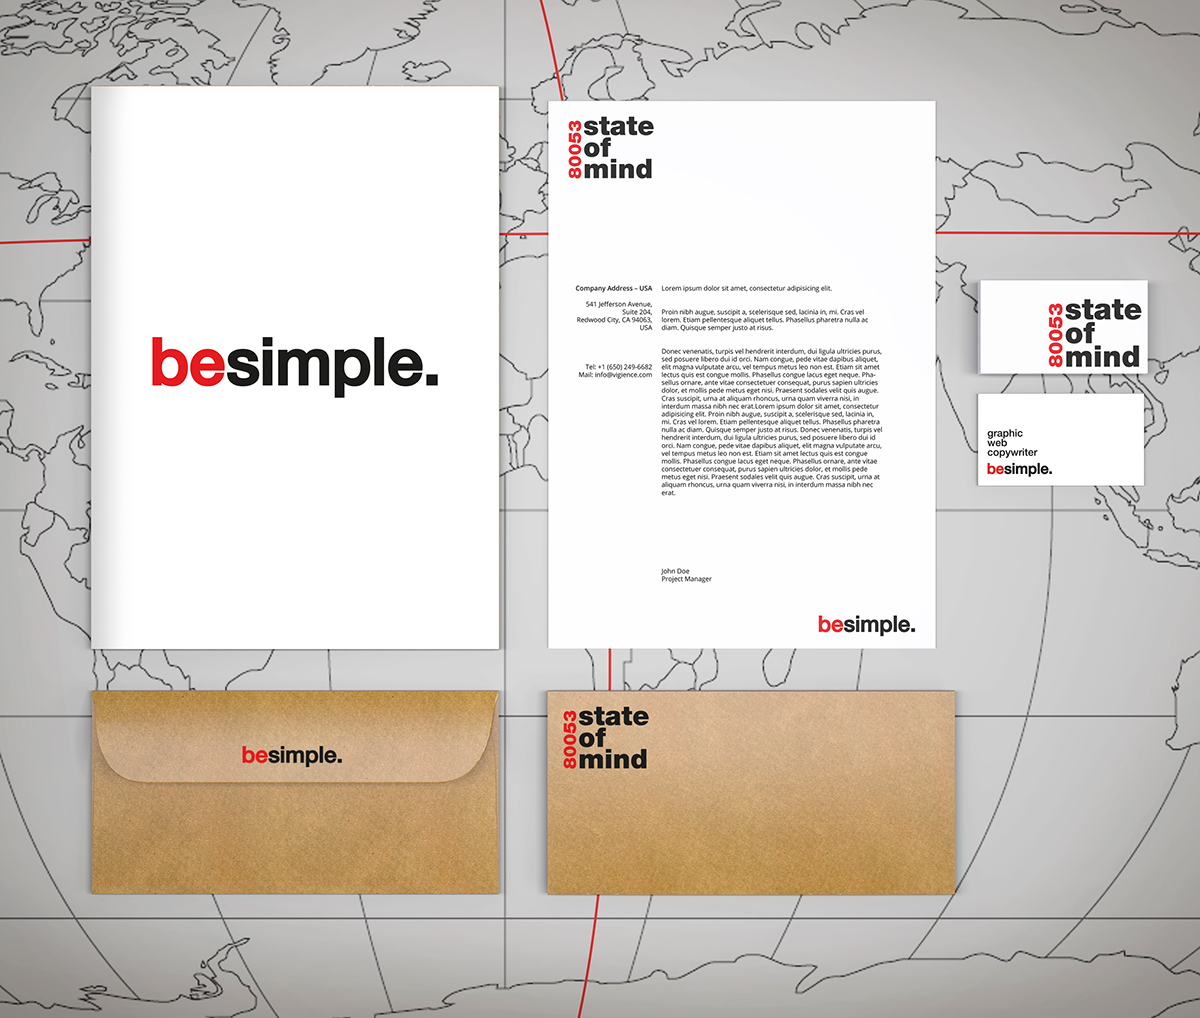 Naples design agency Web copywriter brand identity castellammare business Website page graphic minimal helvetica simple